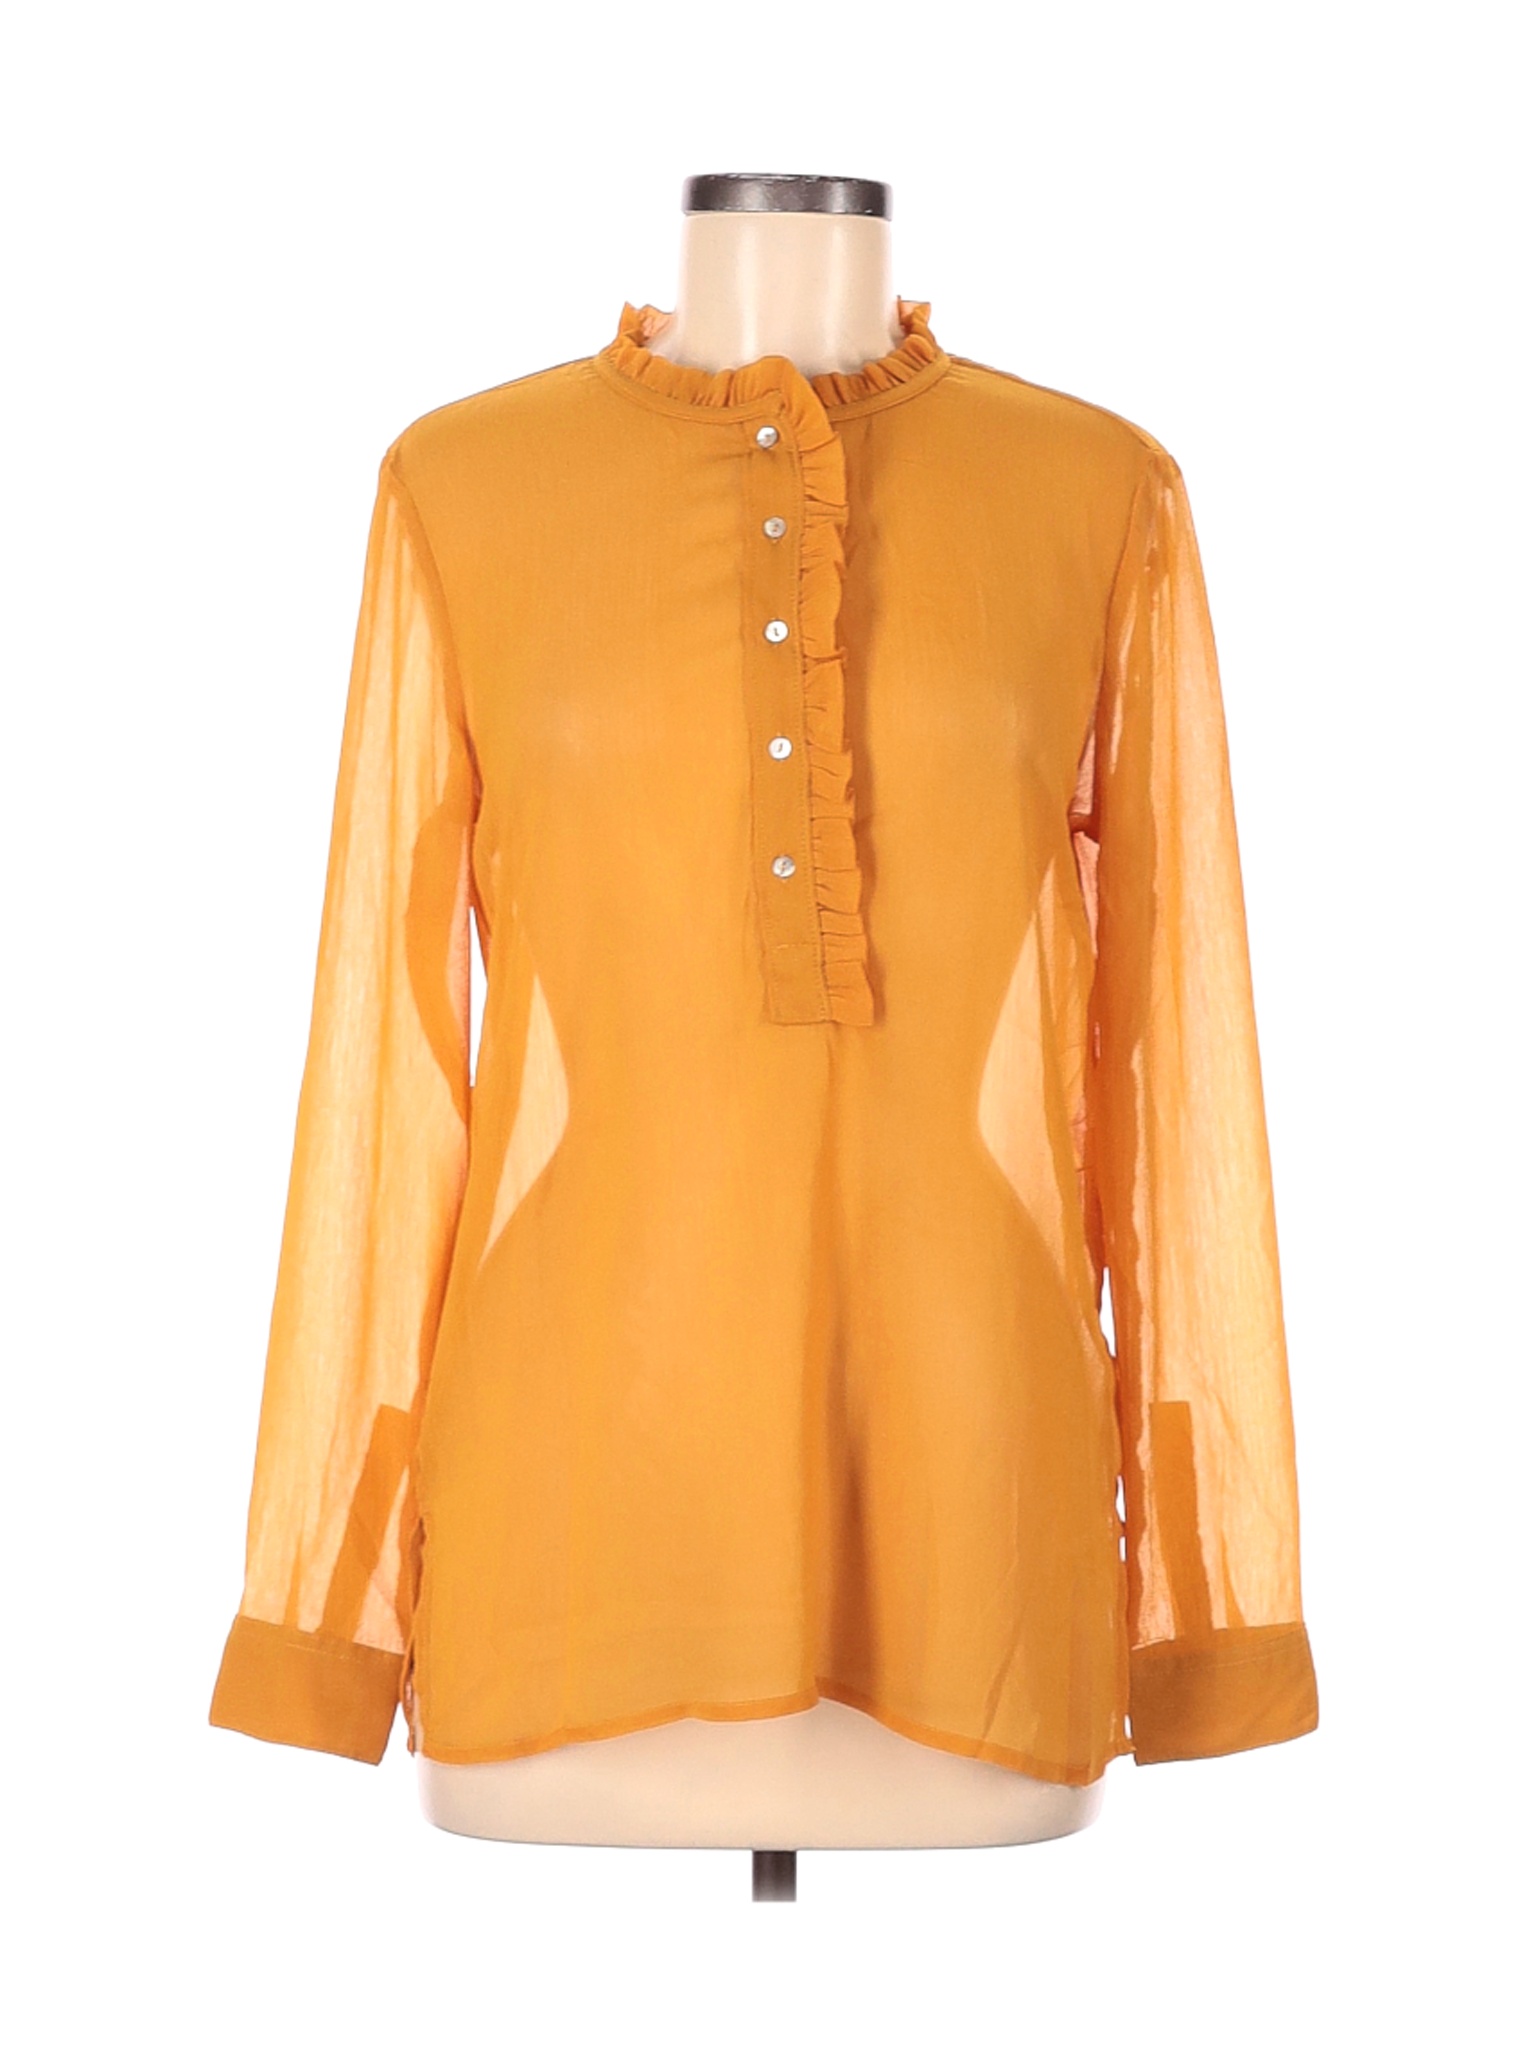 H&M Women Yellow Long Sleeve Blouse 8 | eBay